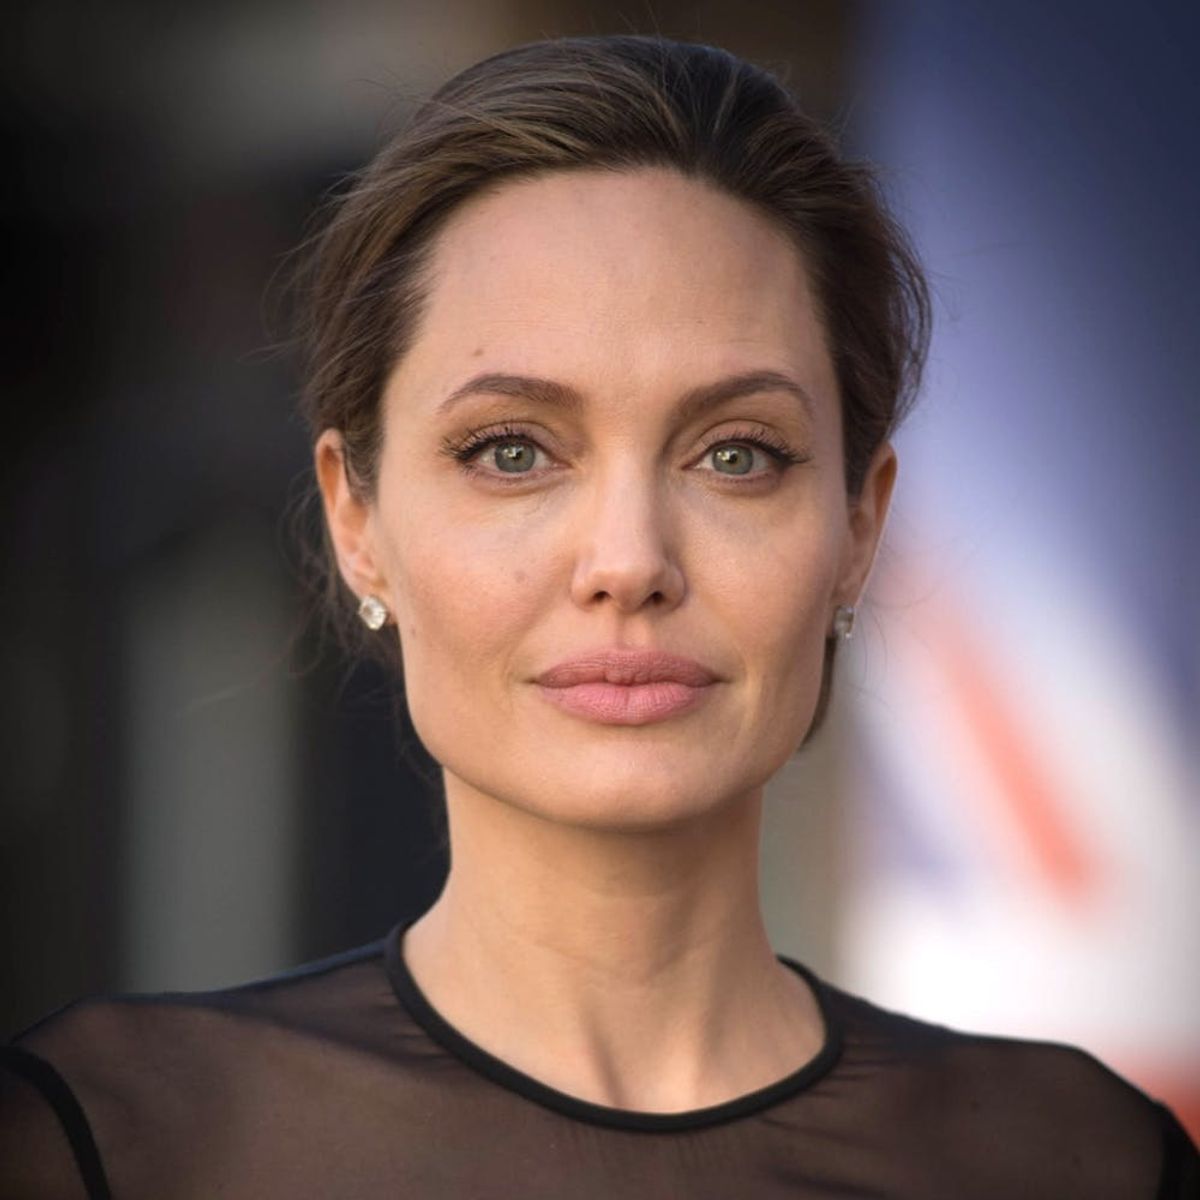 Angelina Jolie Says She’s Still “Healing” After Her Split from Brad Pitt